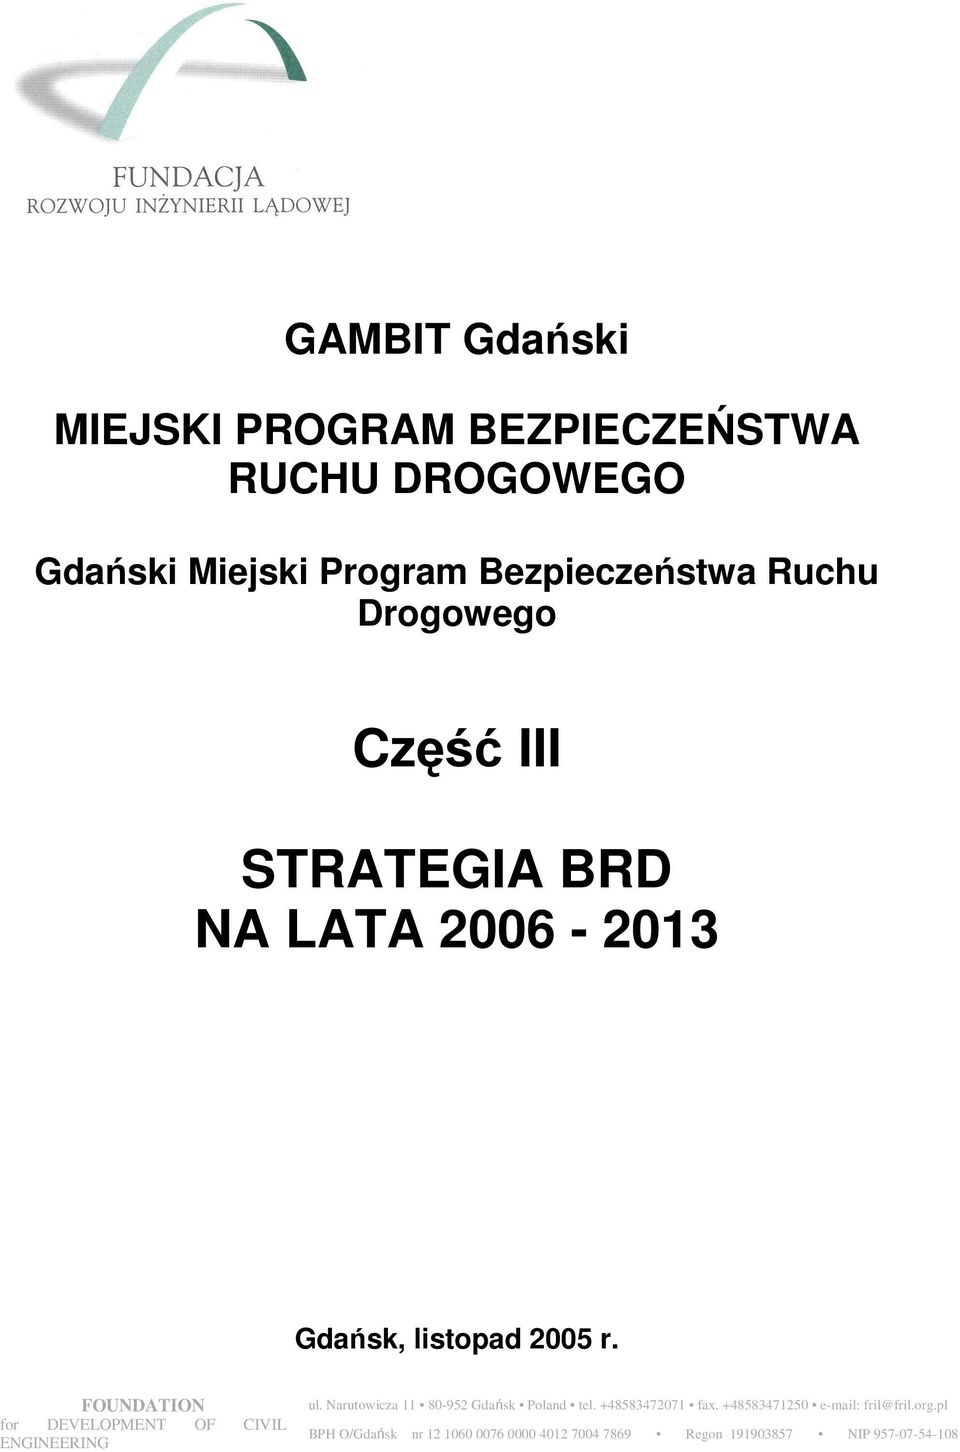 FOUNDATION for DEVELOPMENT OF CIVIL ENGINEERING ul. Narutowicza 11 80-952 Gdańsk Poland tel.